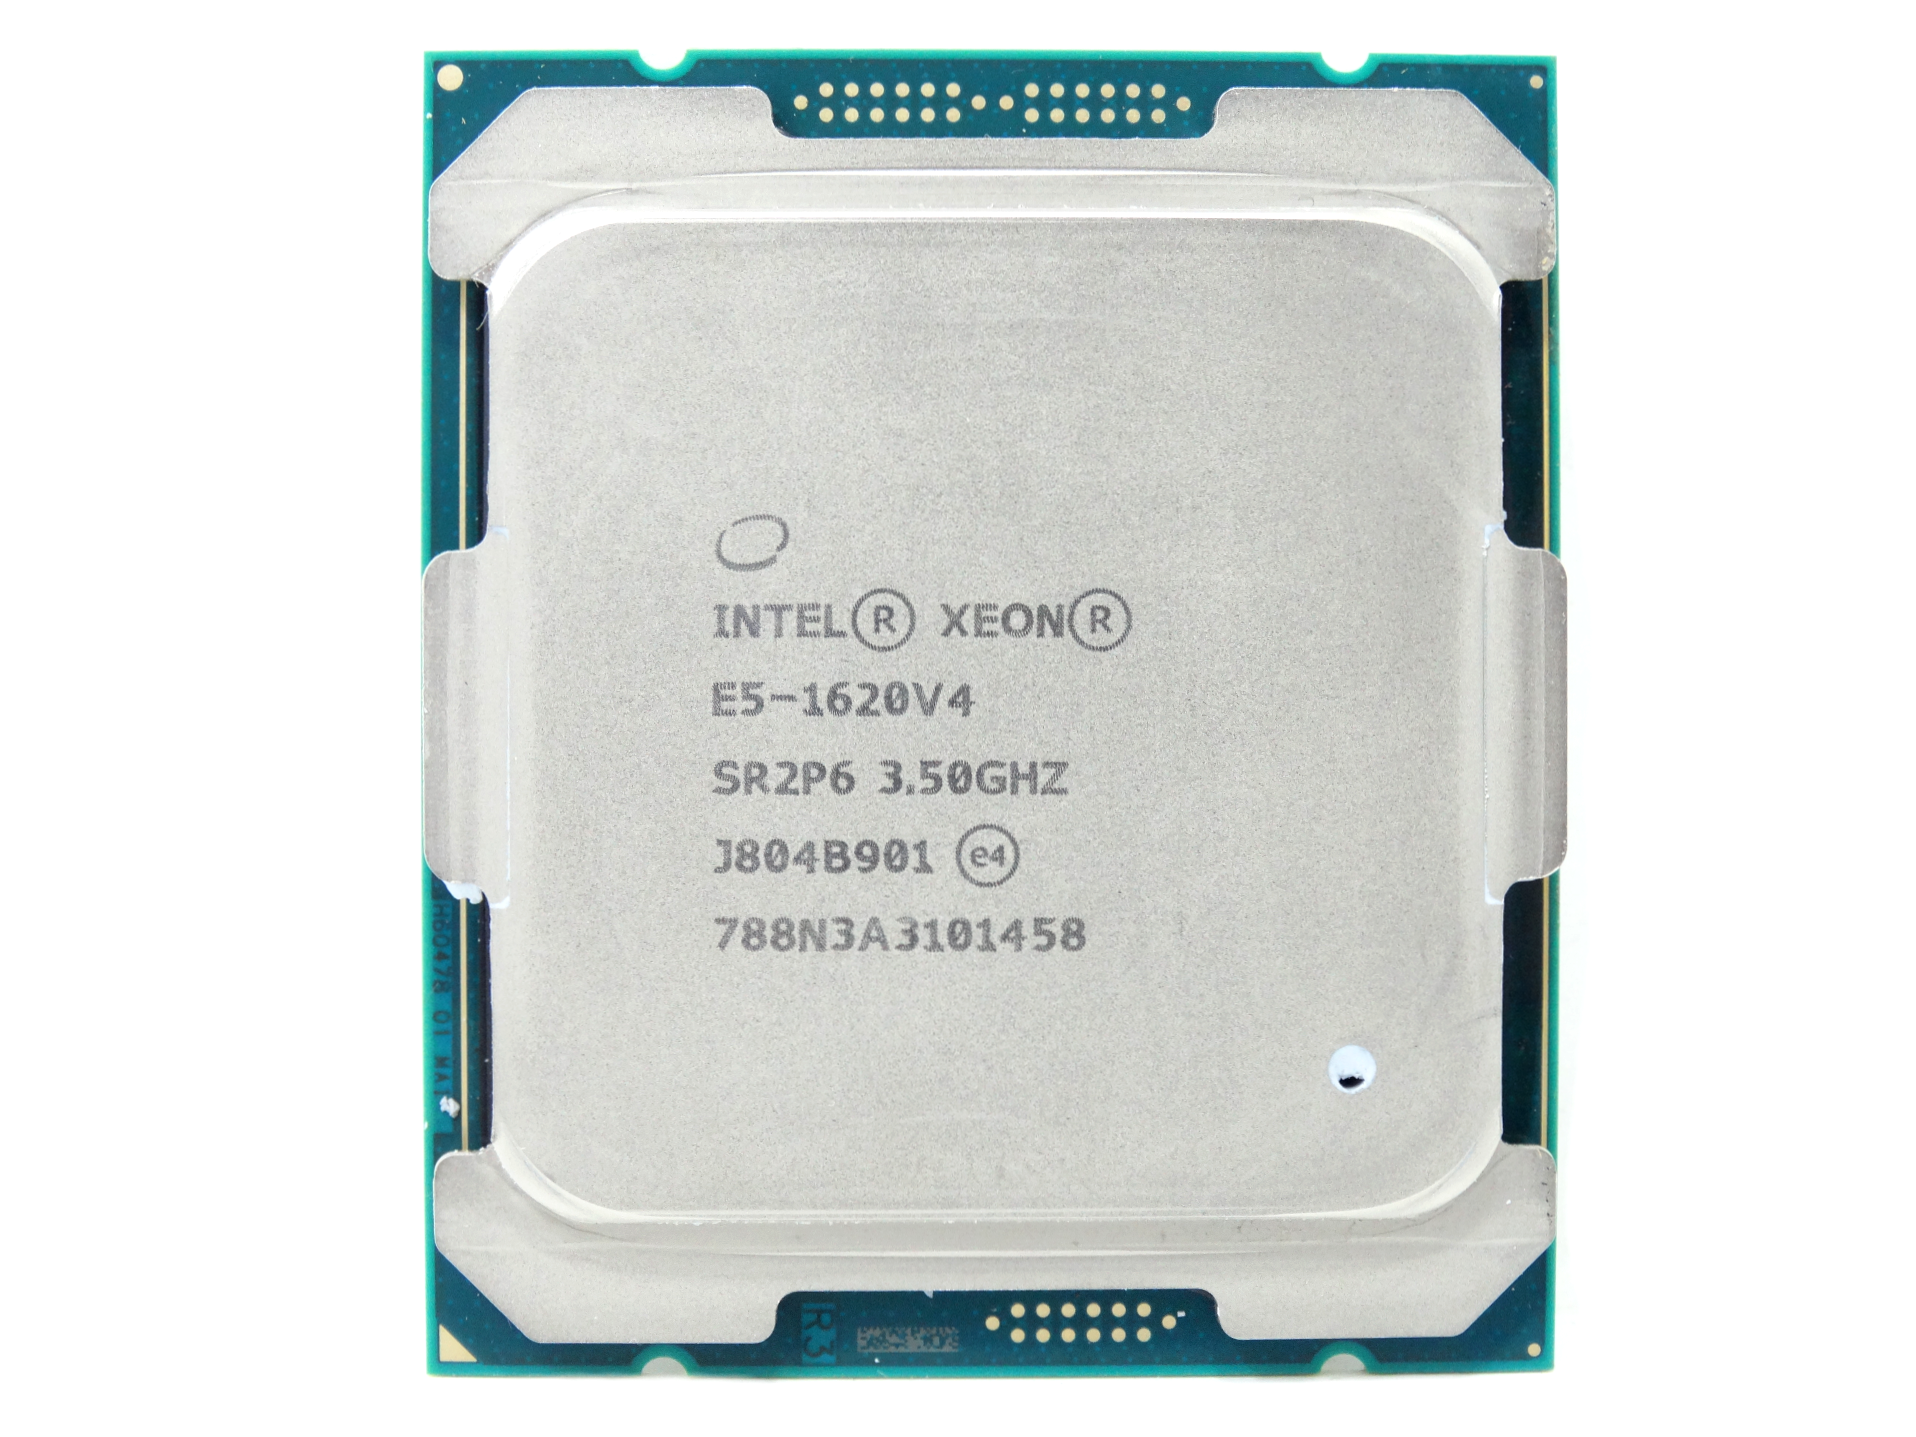 Intel Xeon E5-1620 v4 3.5GHz Quad Core 10MB LGA2011-3 CPU Processor (Intel Xeon E5-1620 V4)